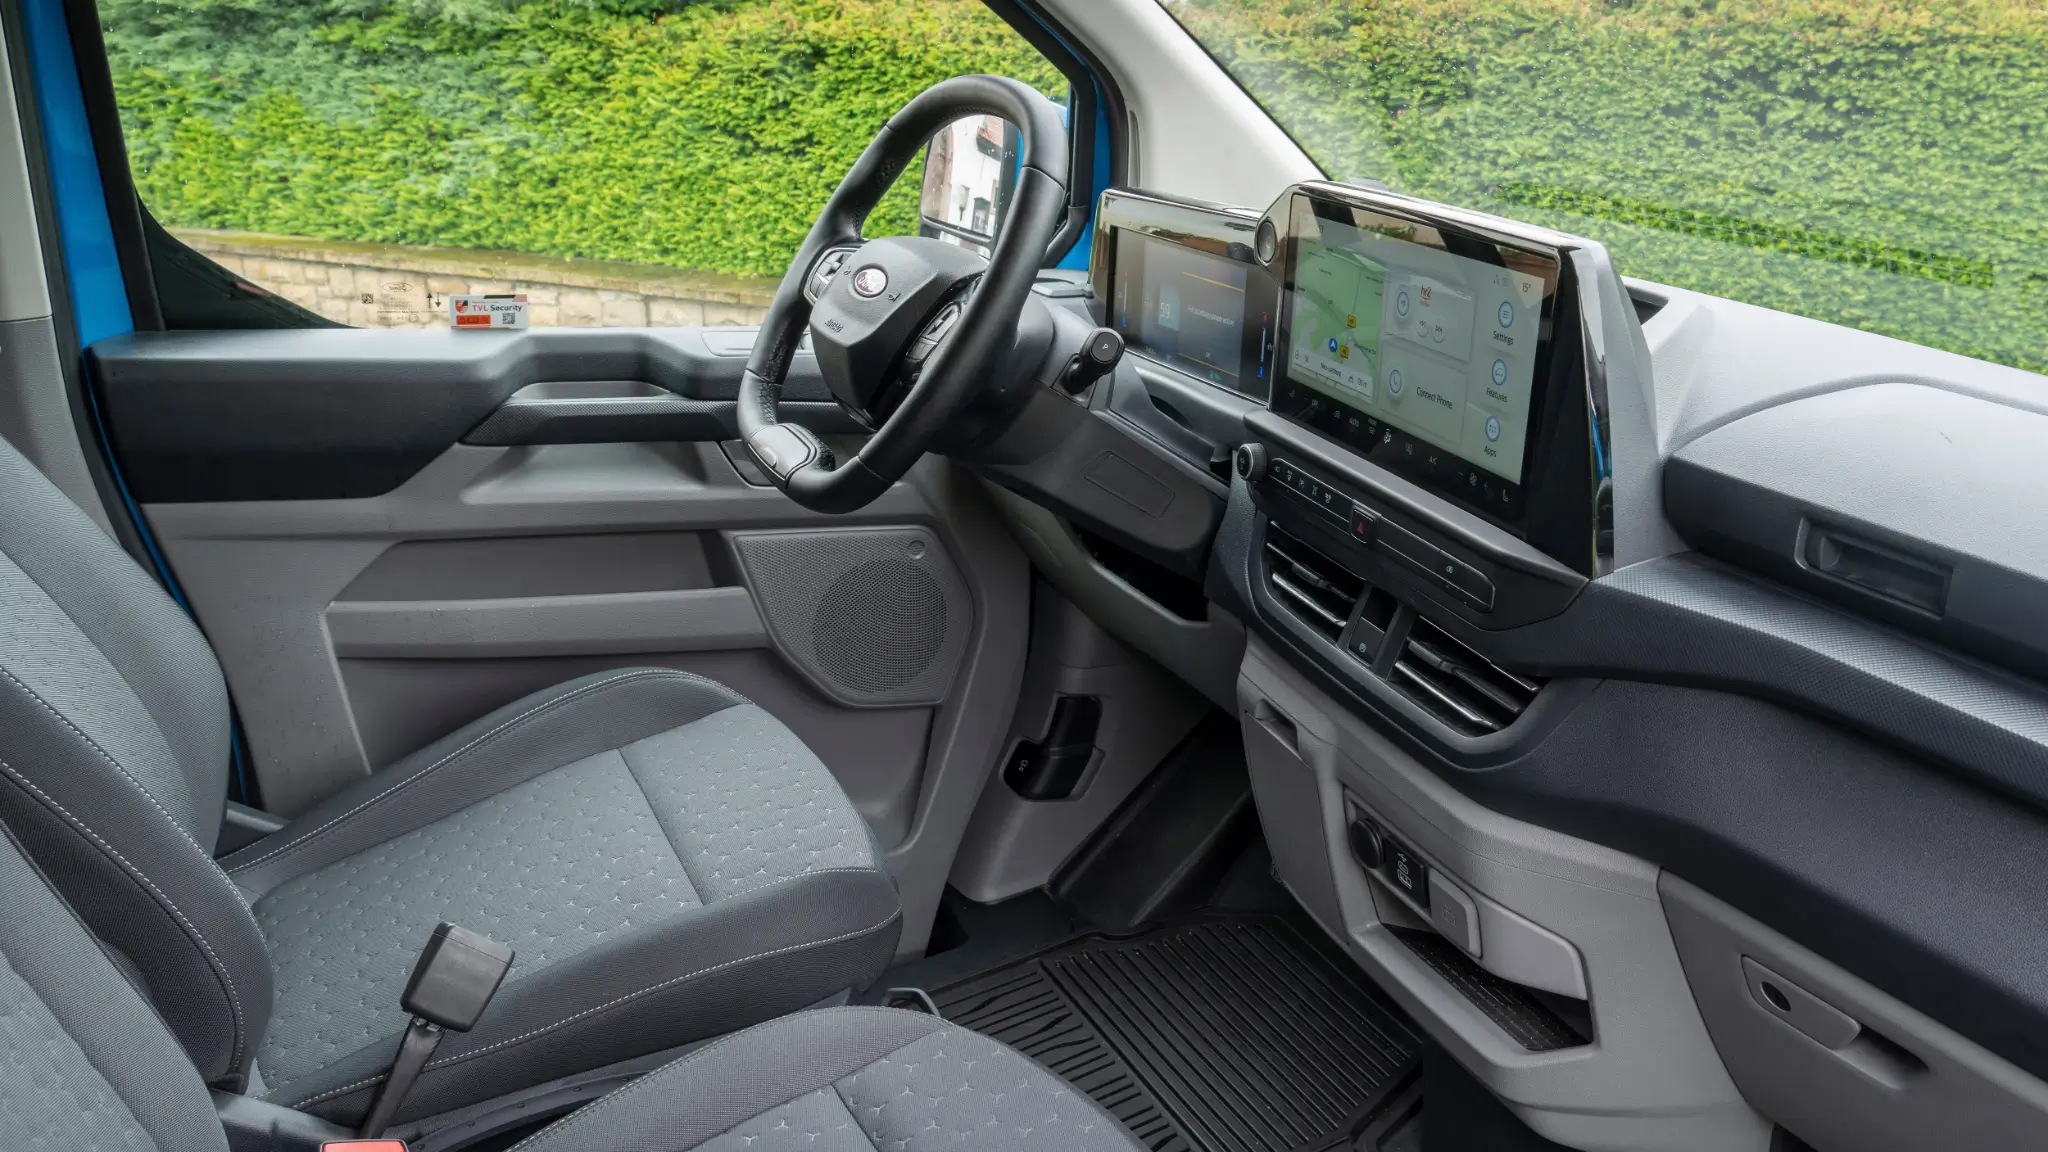 Ford e-transit Custom interior